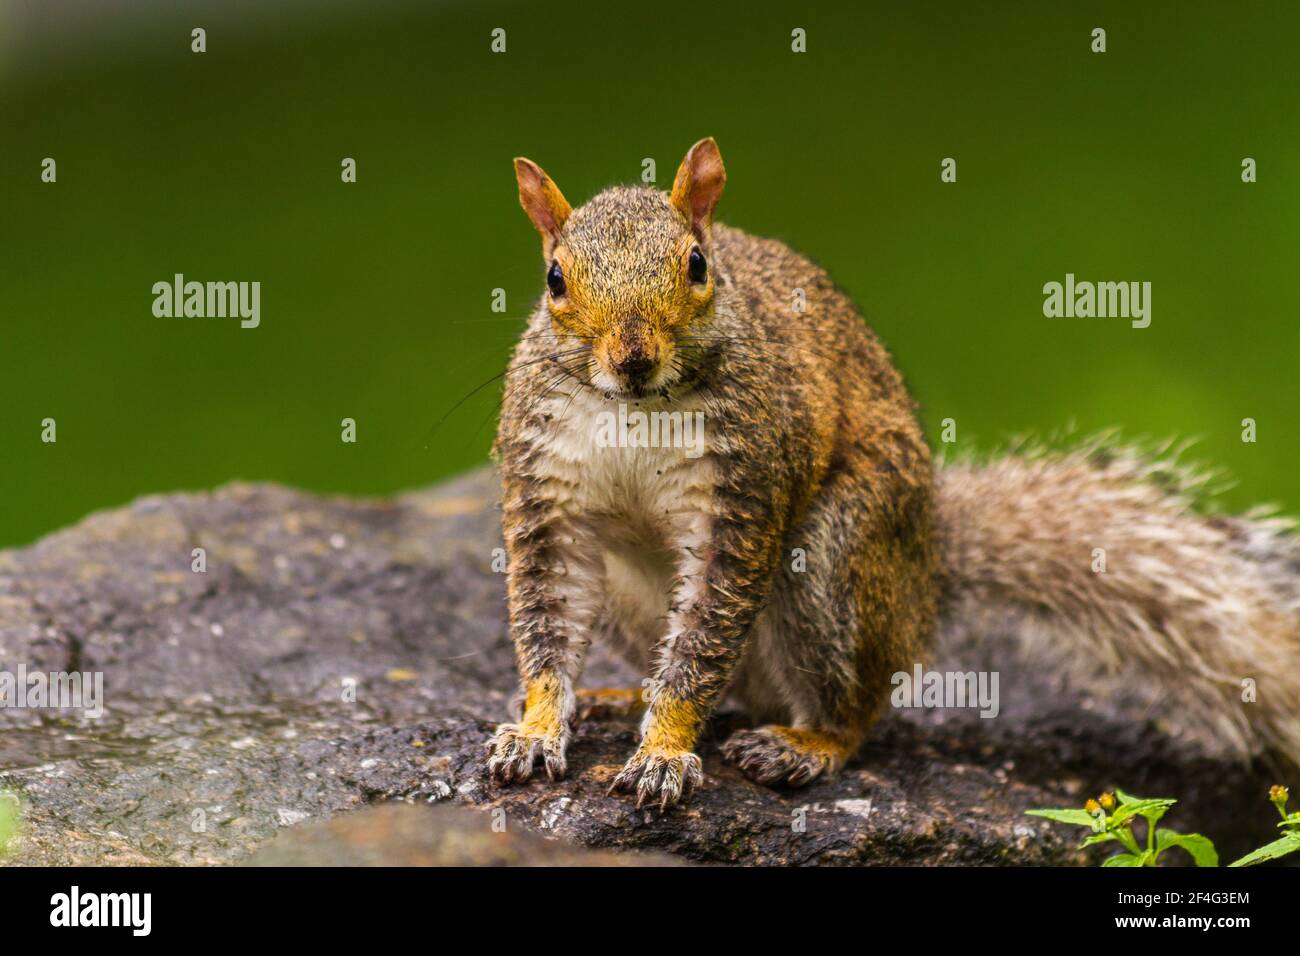 Close-up of an Eastern gray squirrel (Sciurus carolinensis) looking at the camera at Central Park Stock Photo